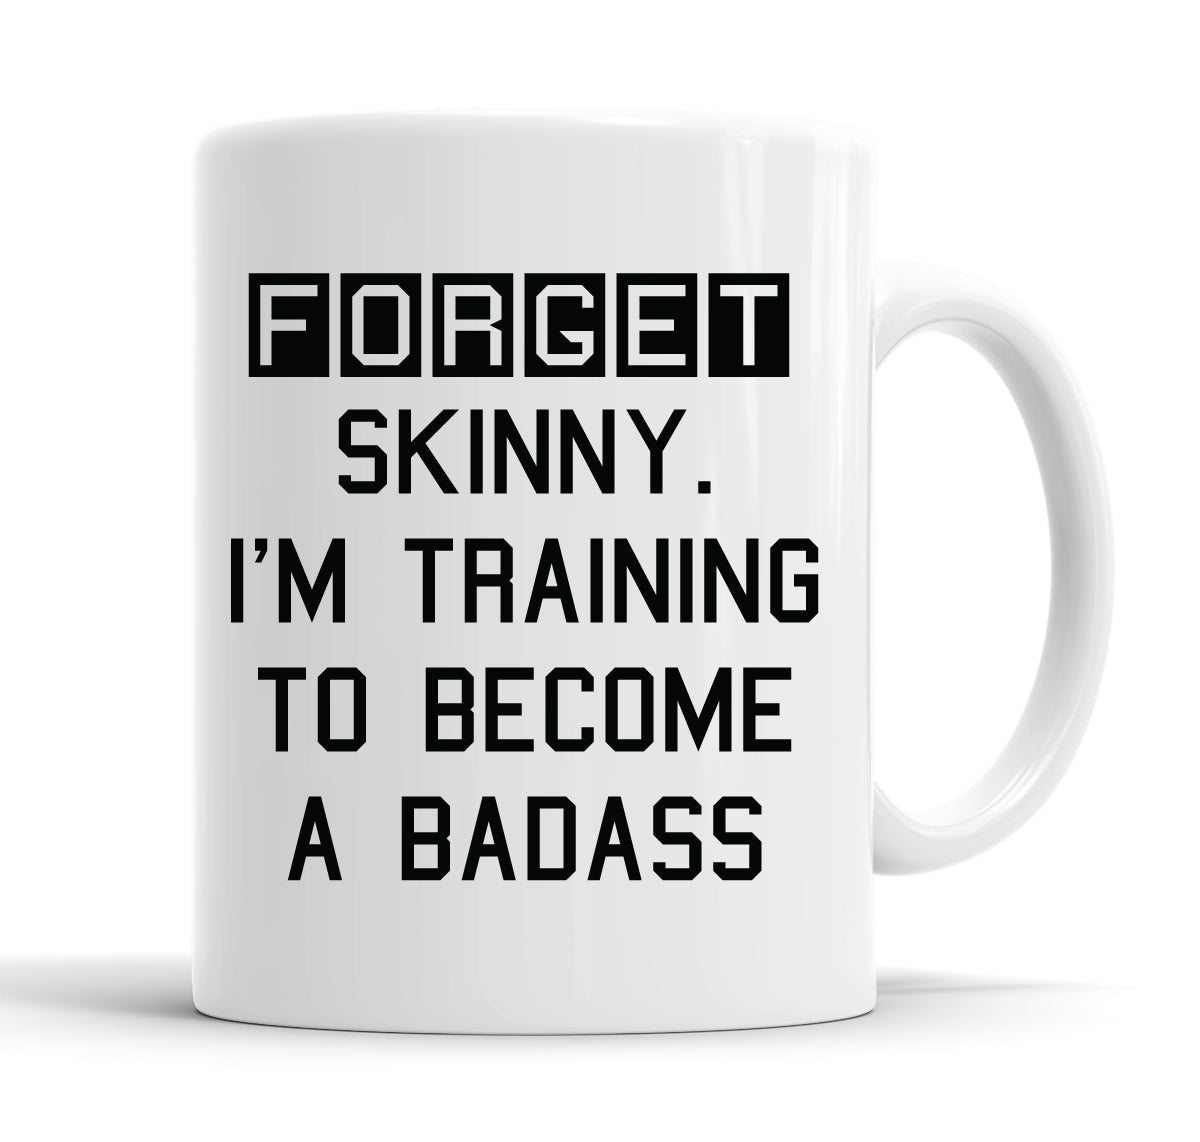 Forget Skinny. I'm Training To Become A Badass Funny Slogan Mug Tea Cup Coffee